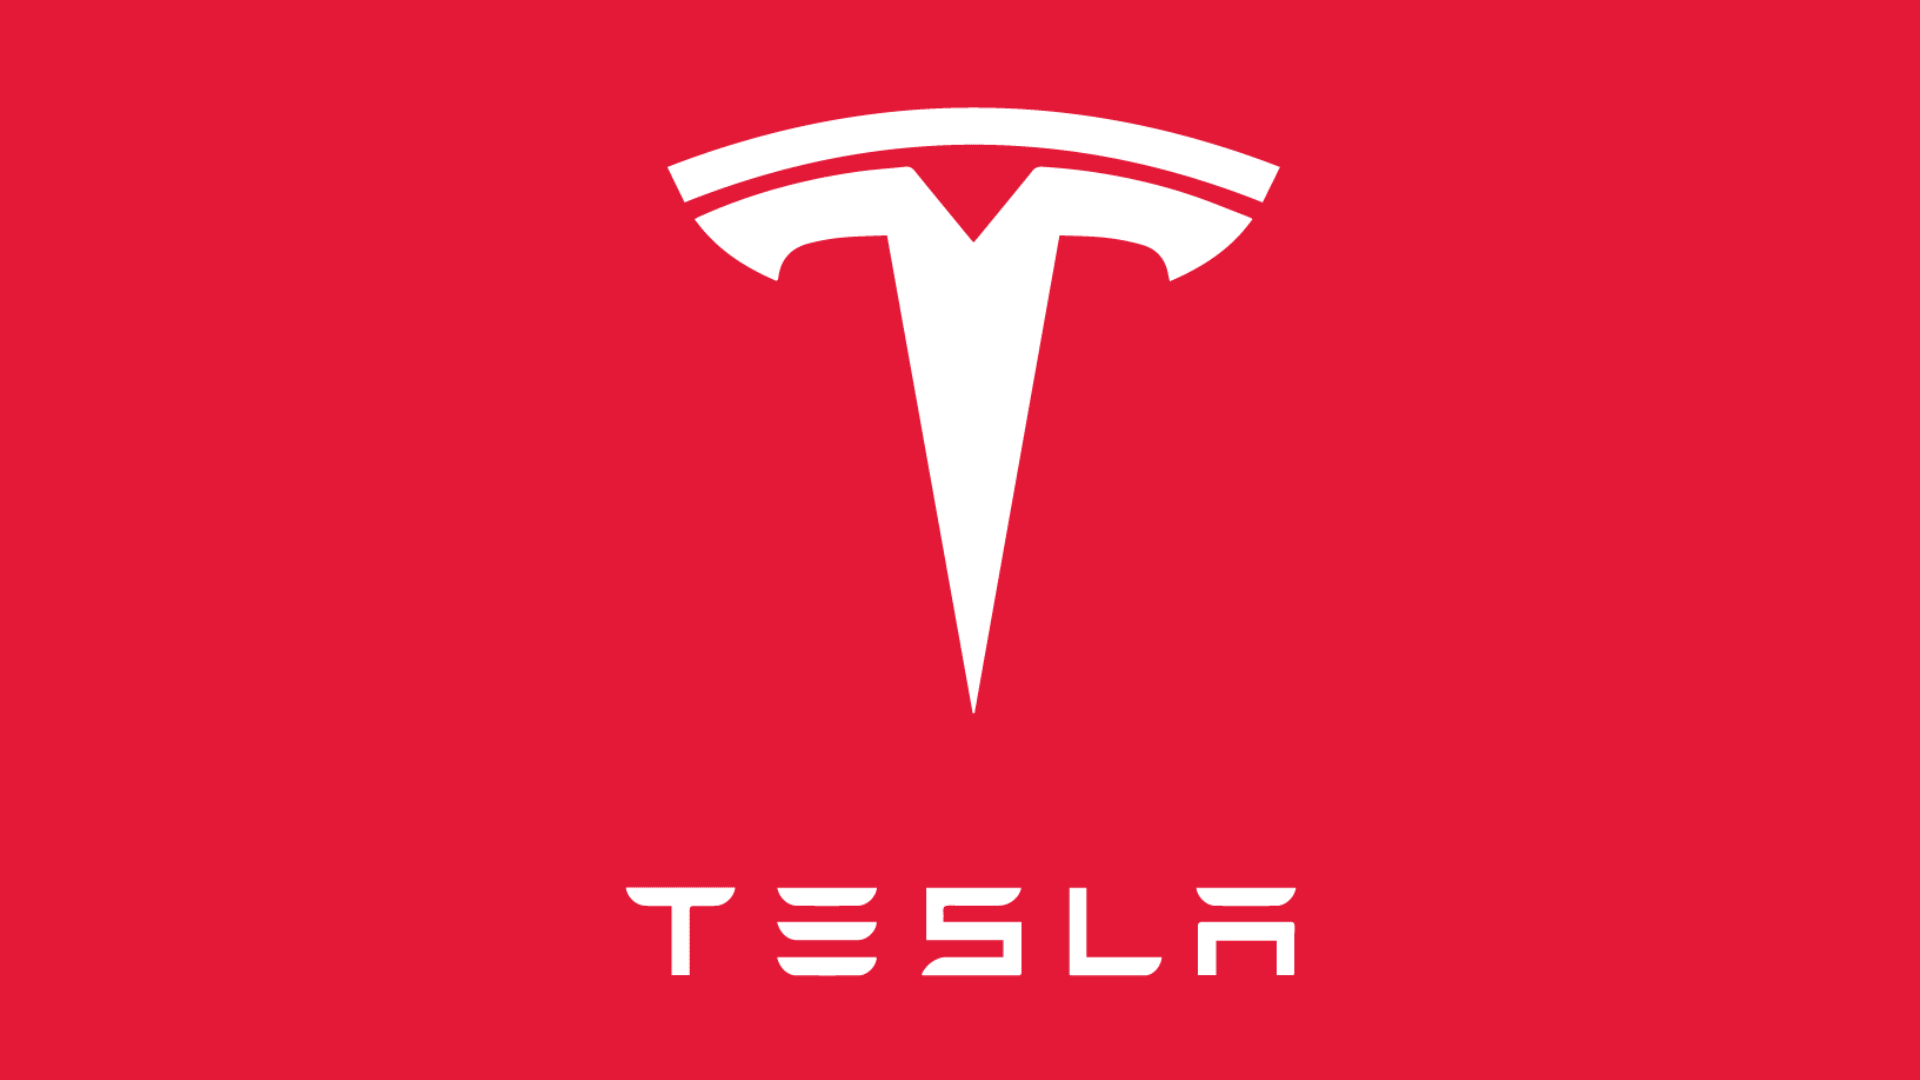 Tesla Model 3 Logo - Will the Tesla Model 3 Really Sell for $25,000? - Bloomberg